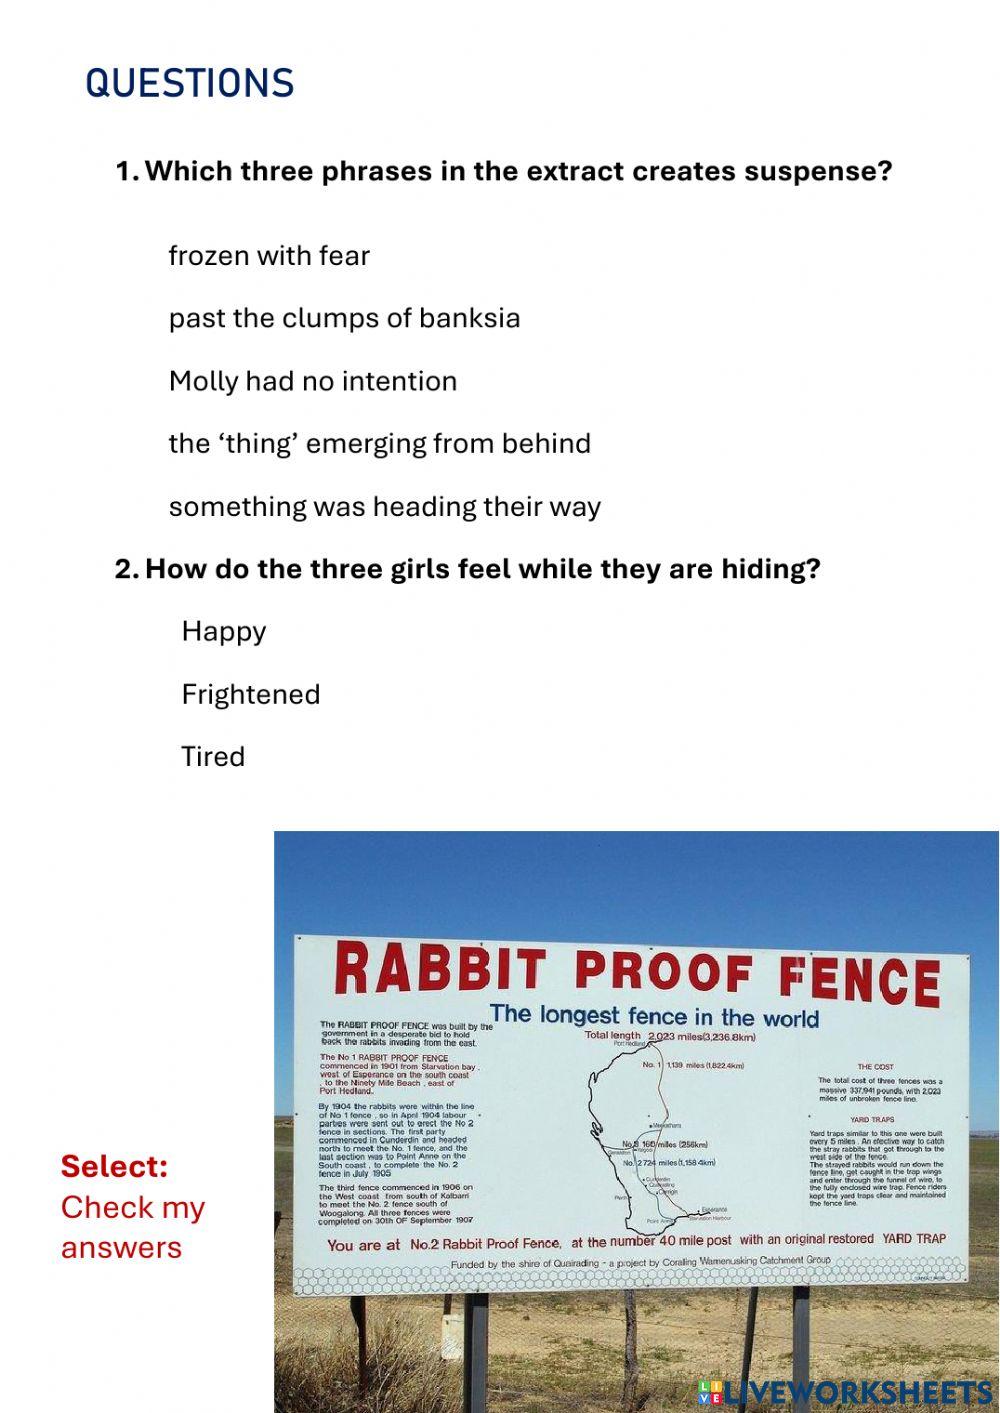 Follow the rabbit proof fence